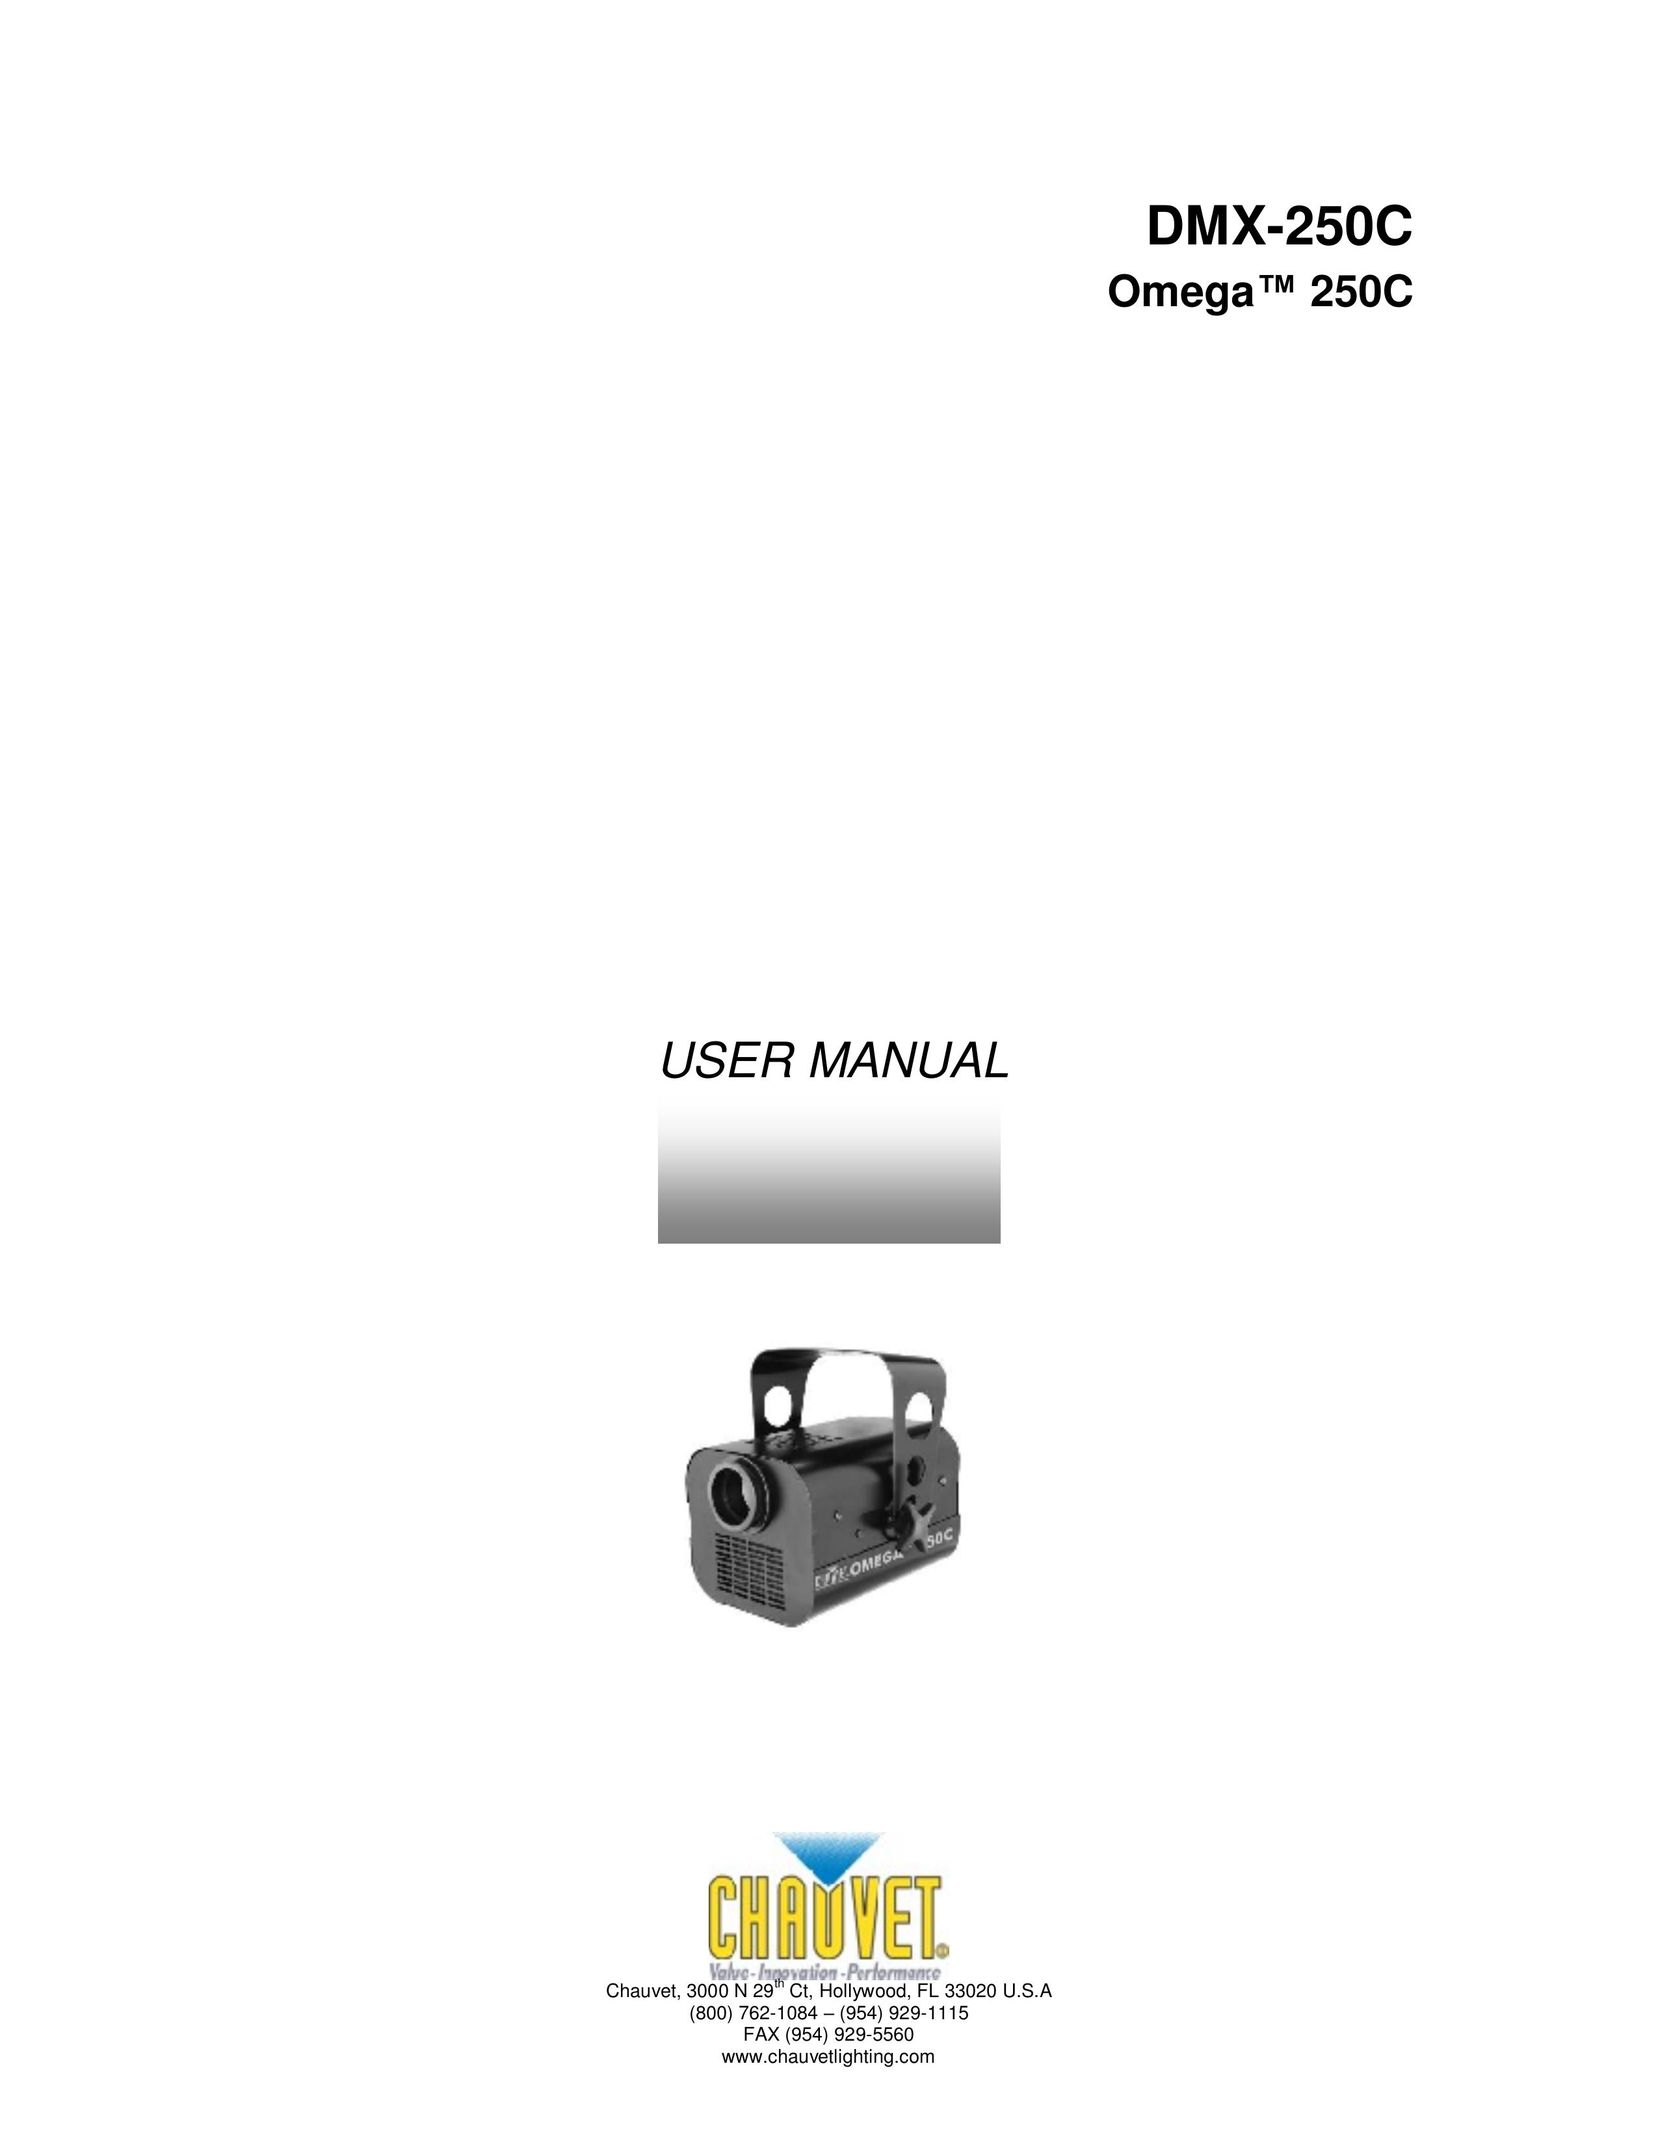 Chauvet DMX-250C Work Light User Manual